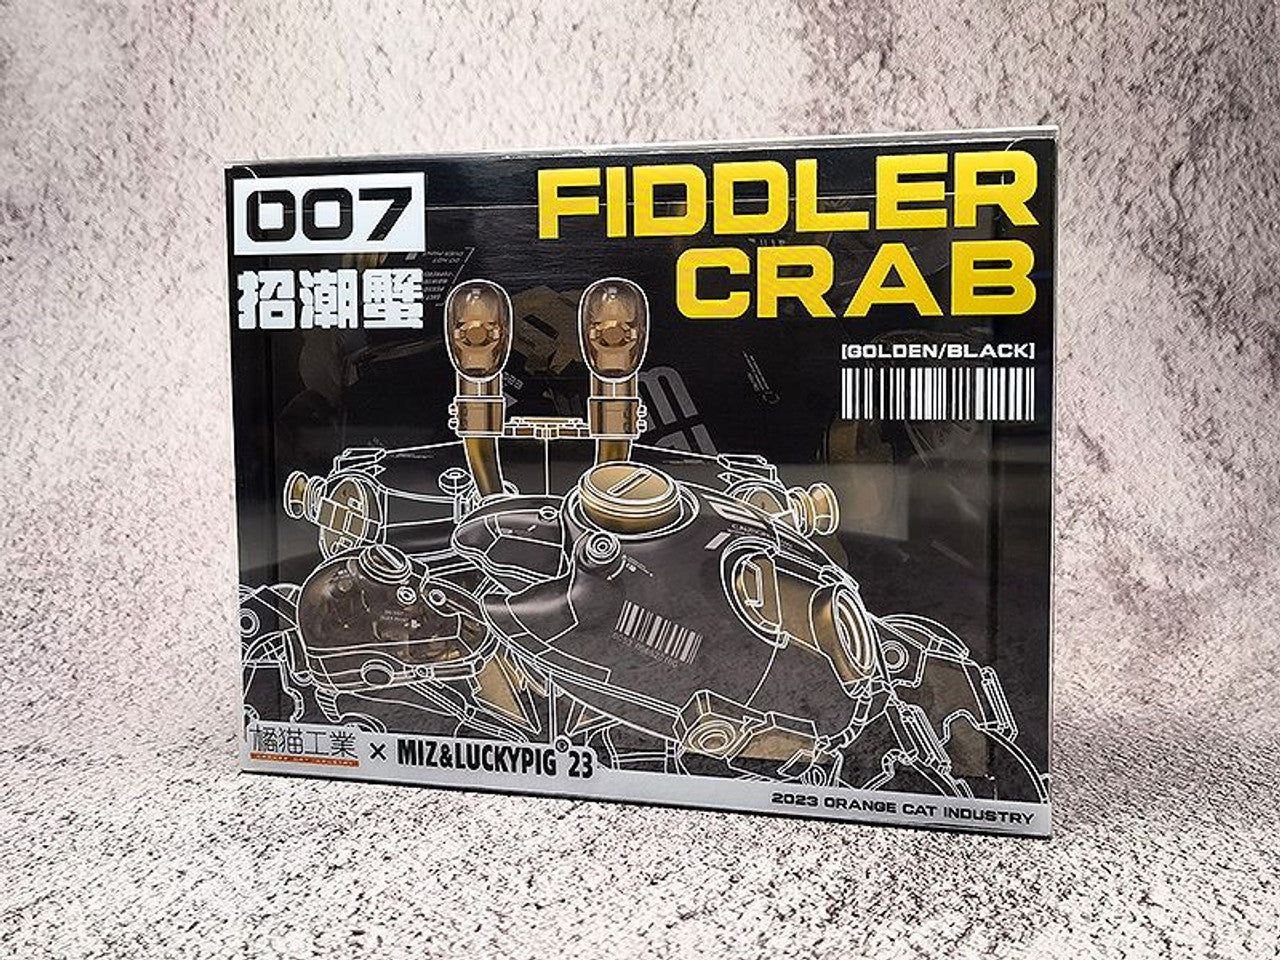 Orange Cat Industry Aquaculture Tank Series 007 Fiddler Crab (Gold Black) Model Kit